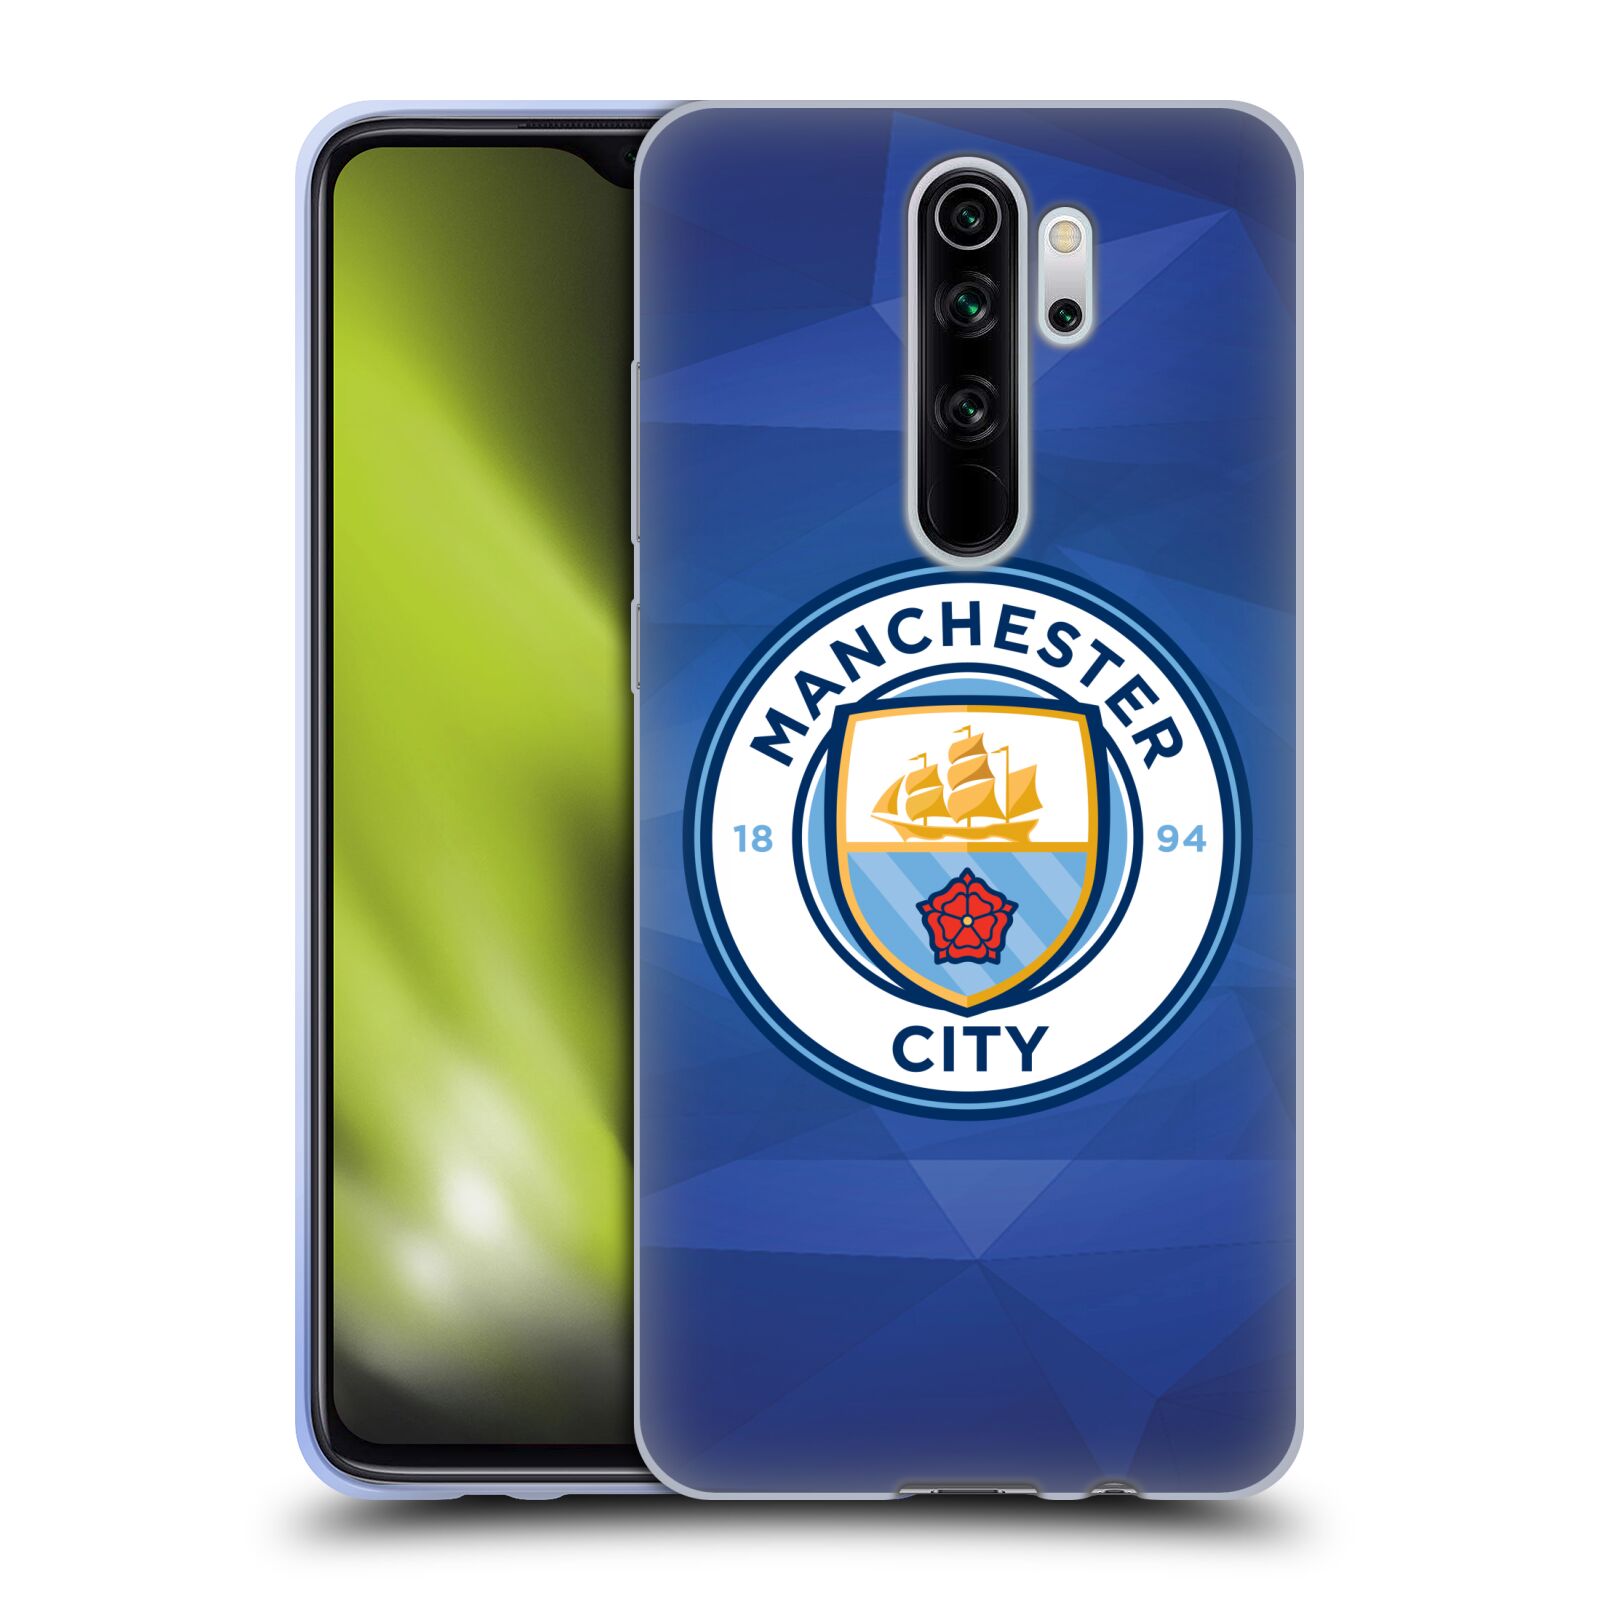 Silikonové pouzdro na mobil Xiaomi Redmi Note 8 Pro - Head Case - Manchester City FC - Modré nové logo